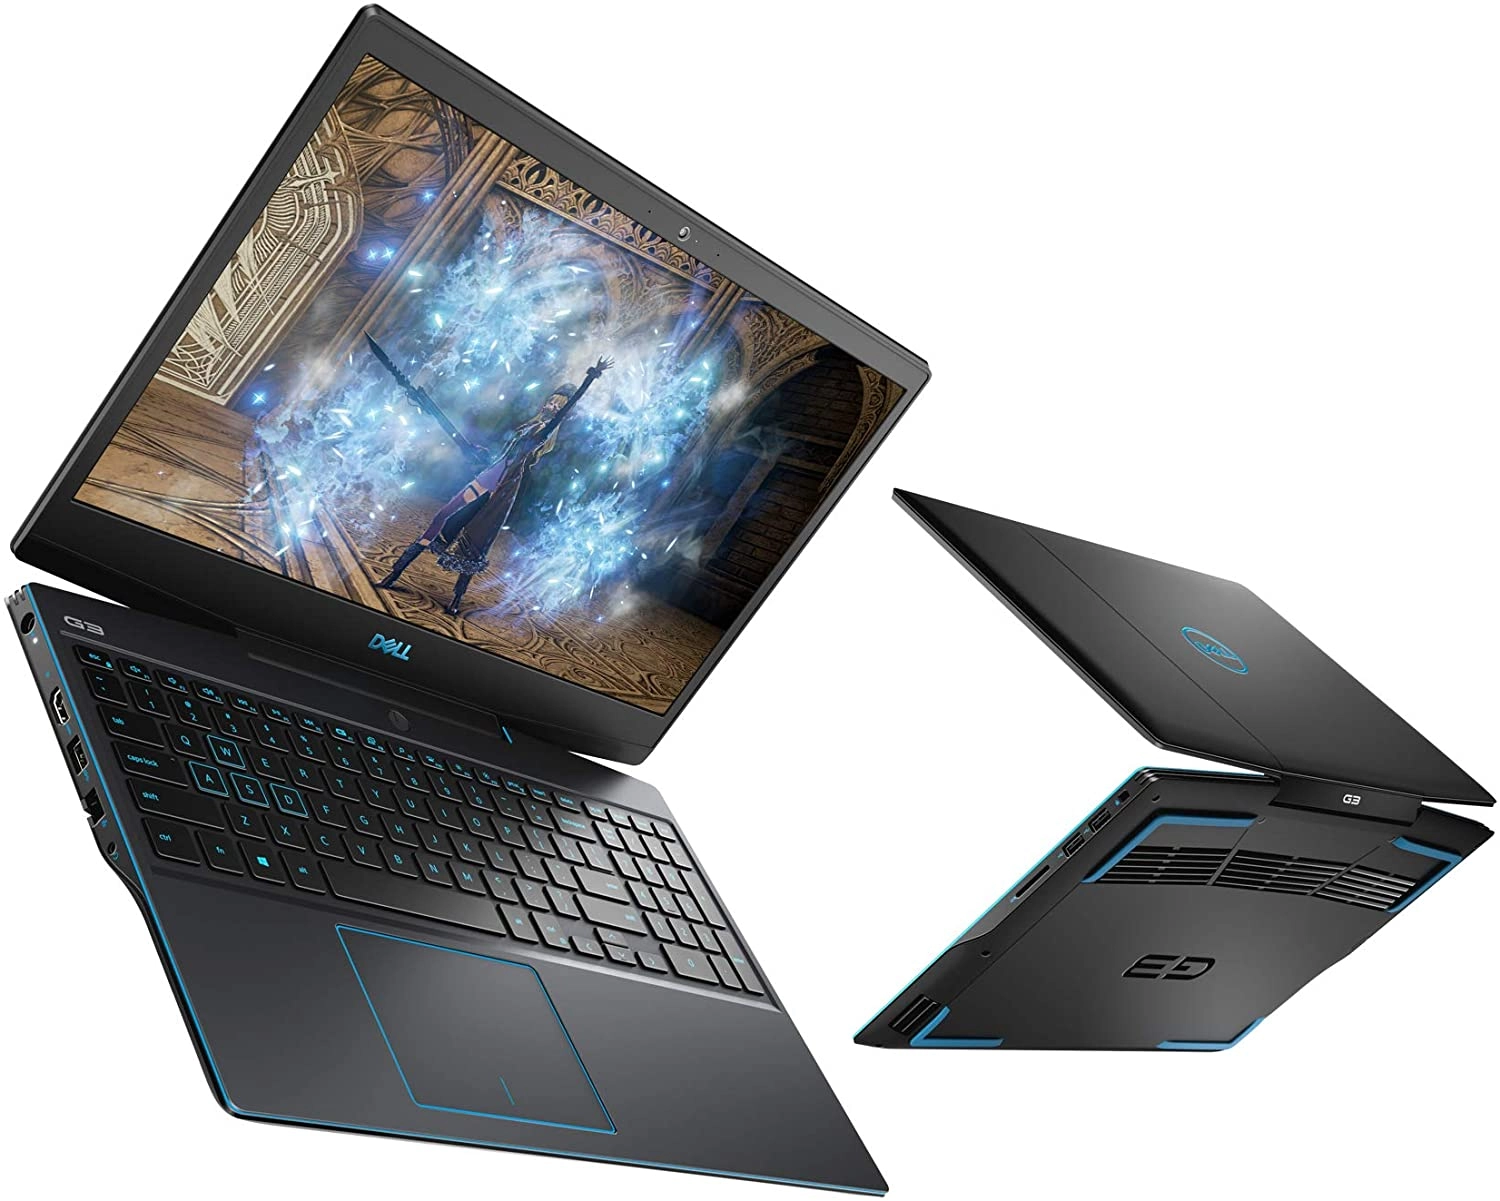 Dell I3500-7722BLK-PUS laptop image